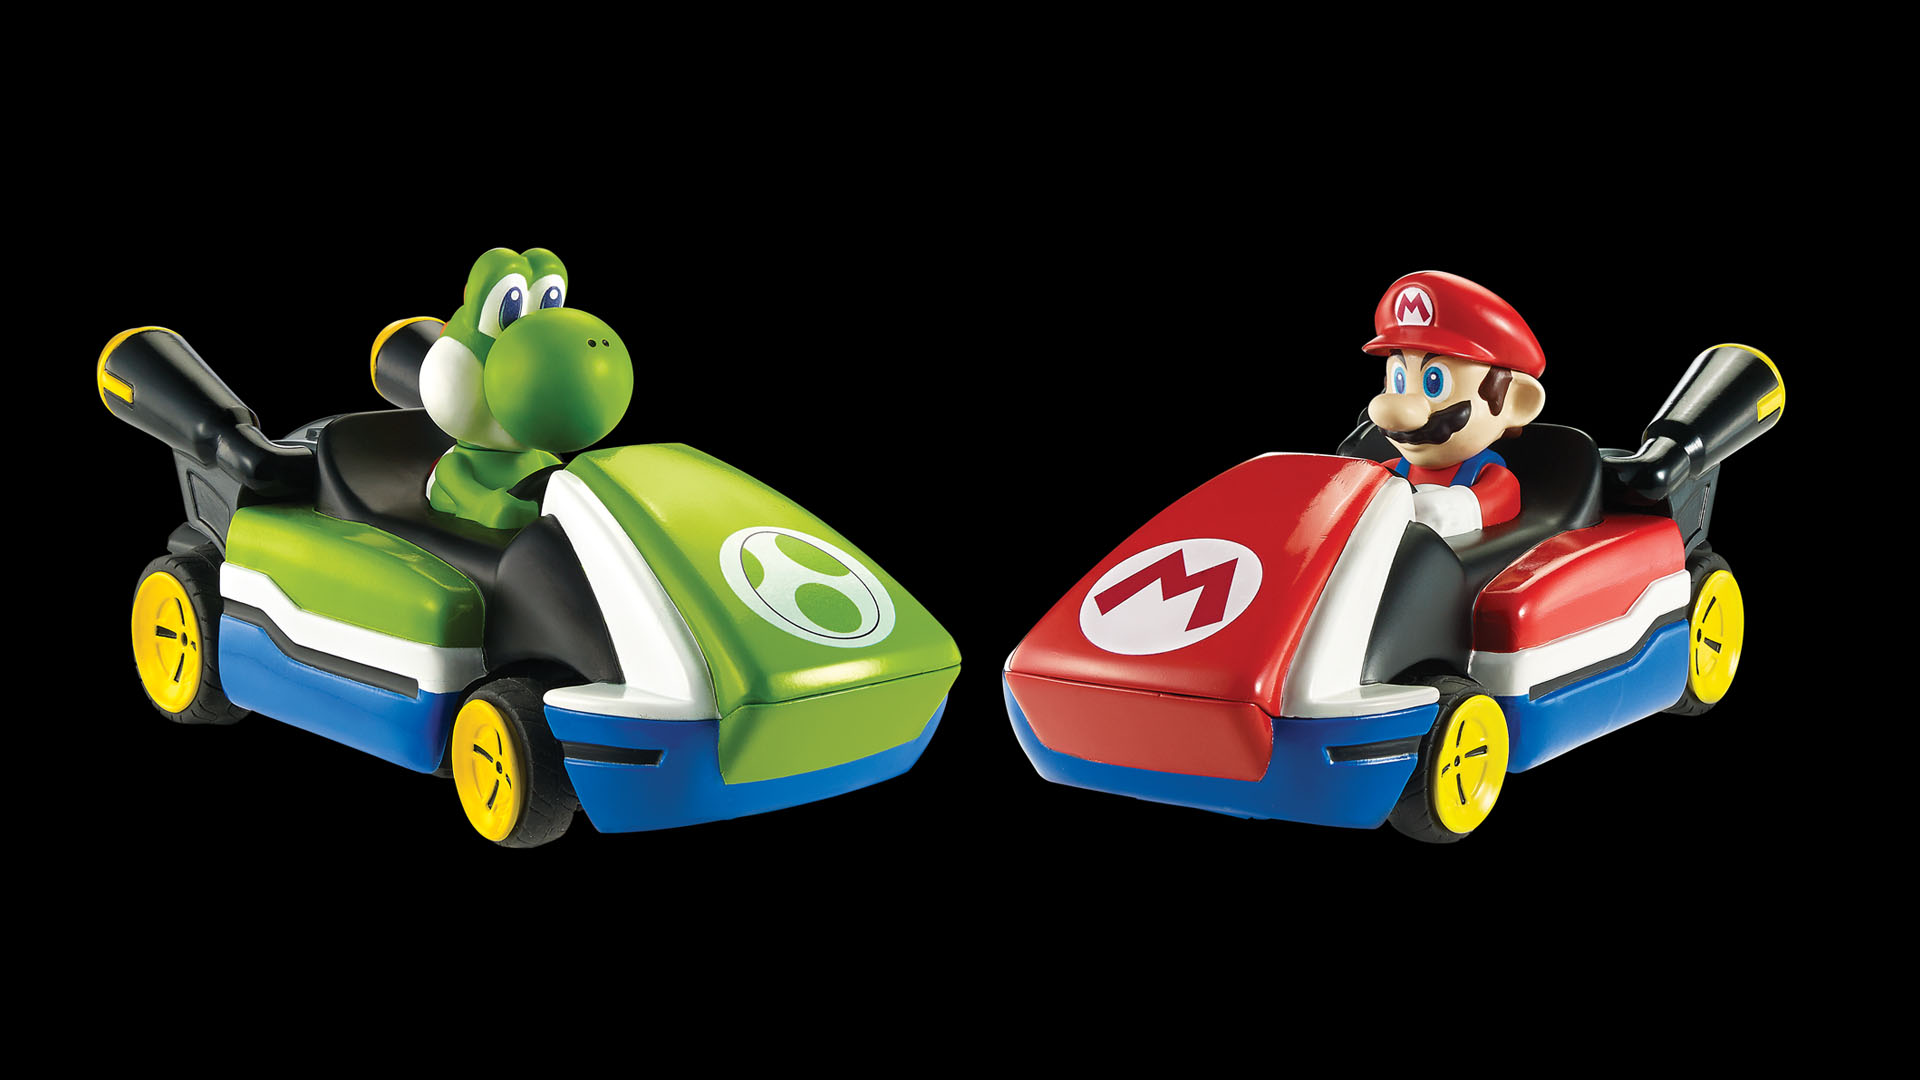 Hot Wheels Ai Mario Kart Edition debuts at San Diego Comic-Con - Nintendo W...